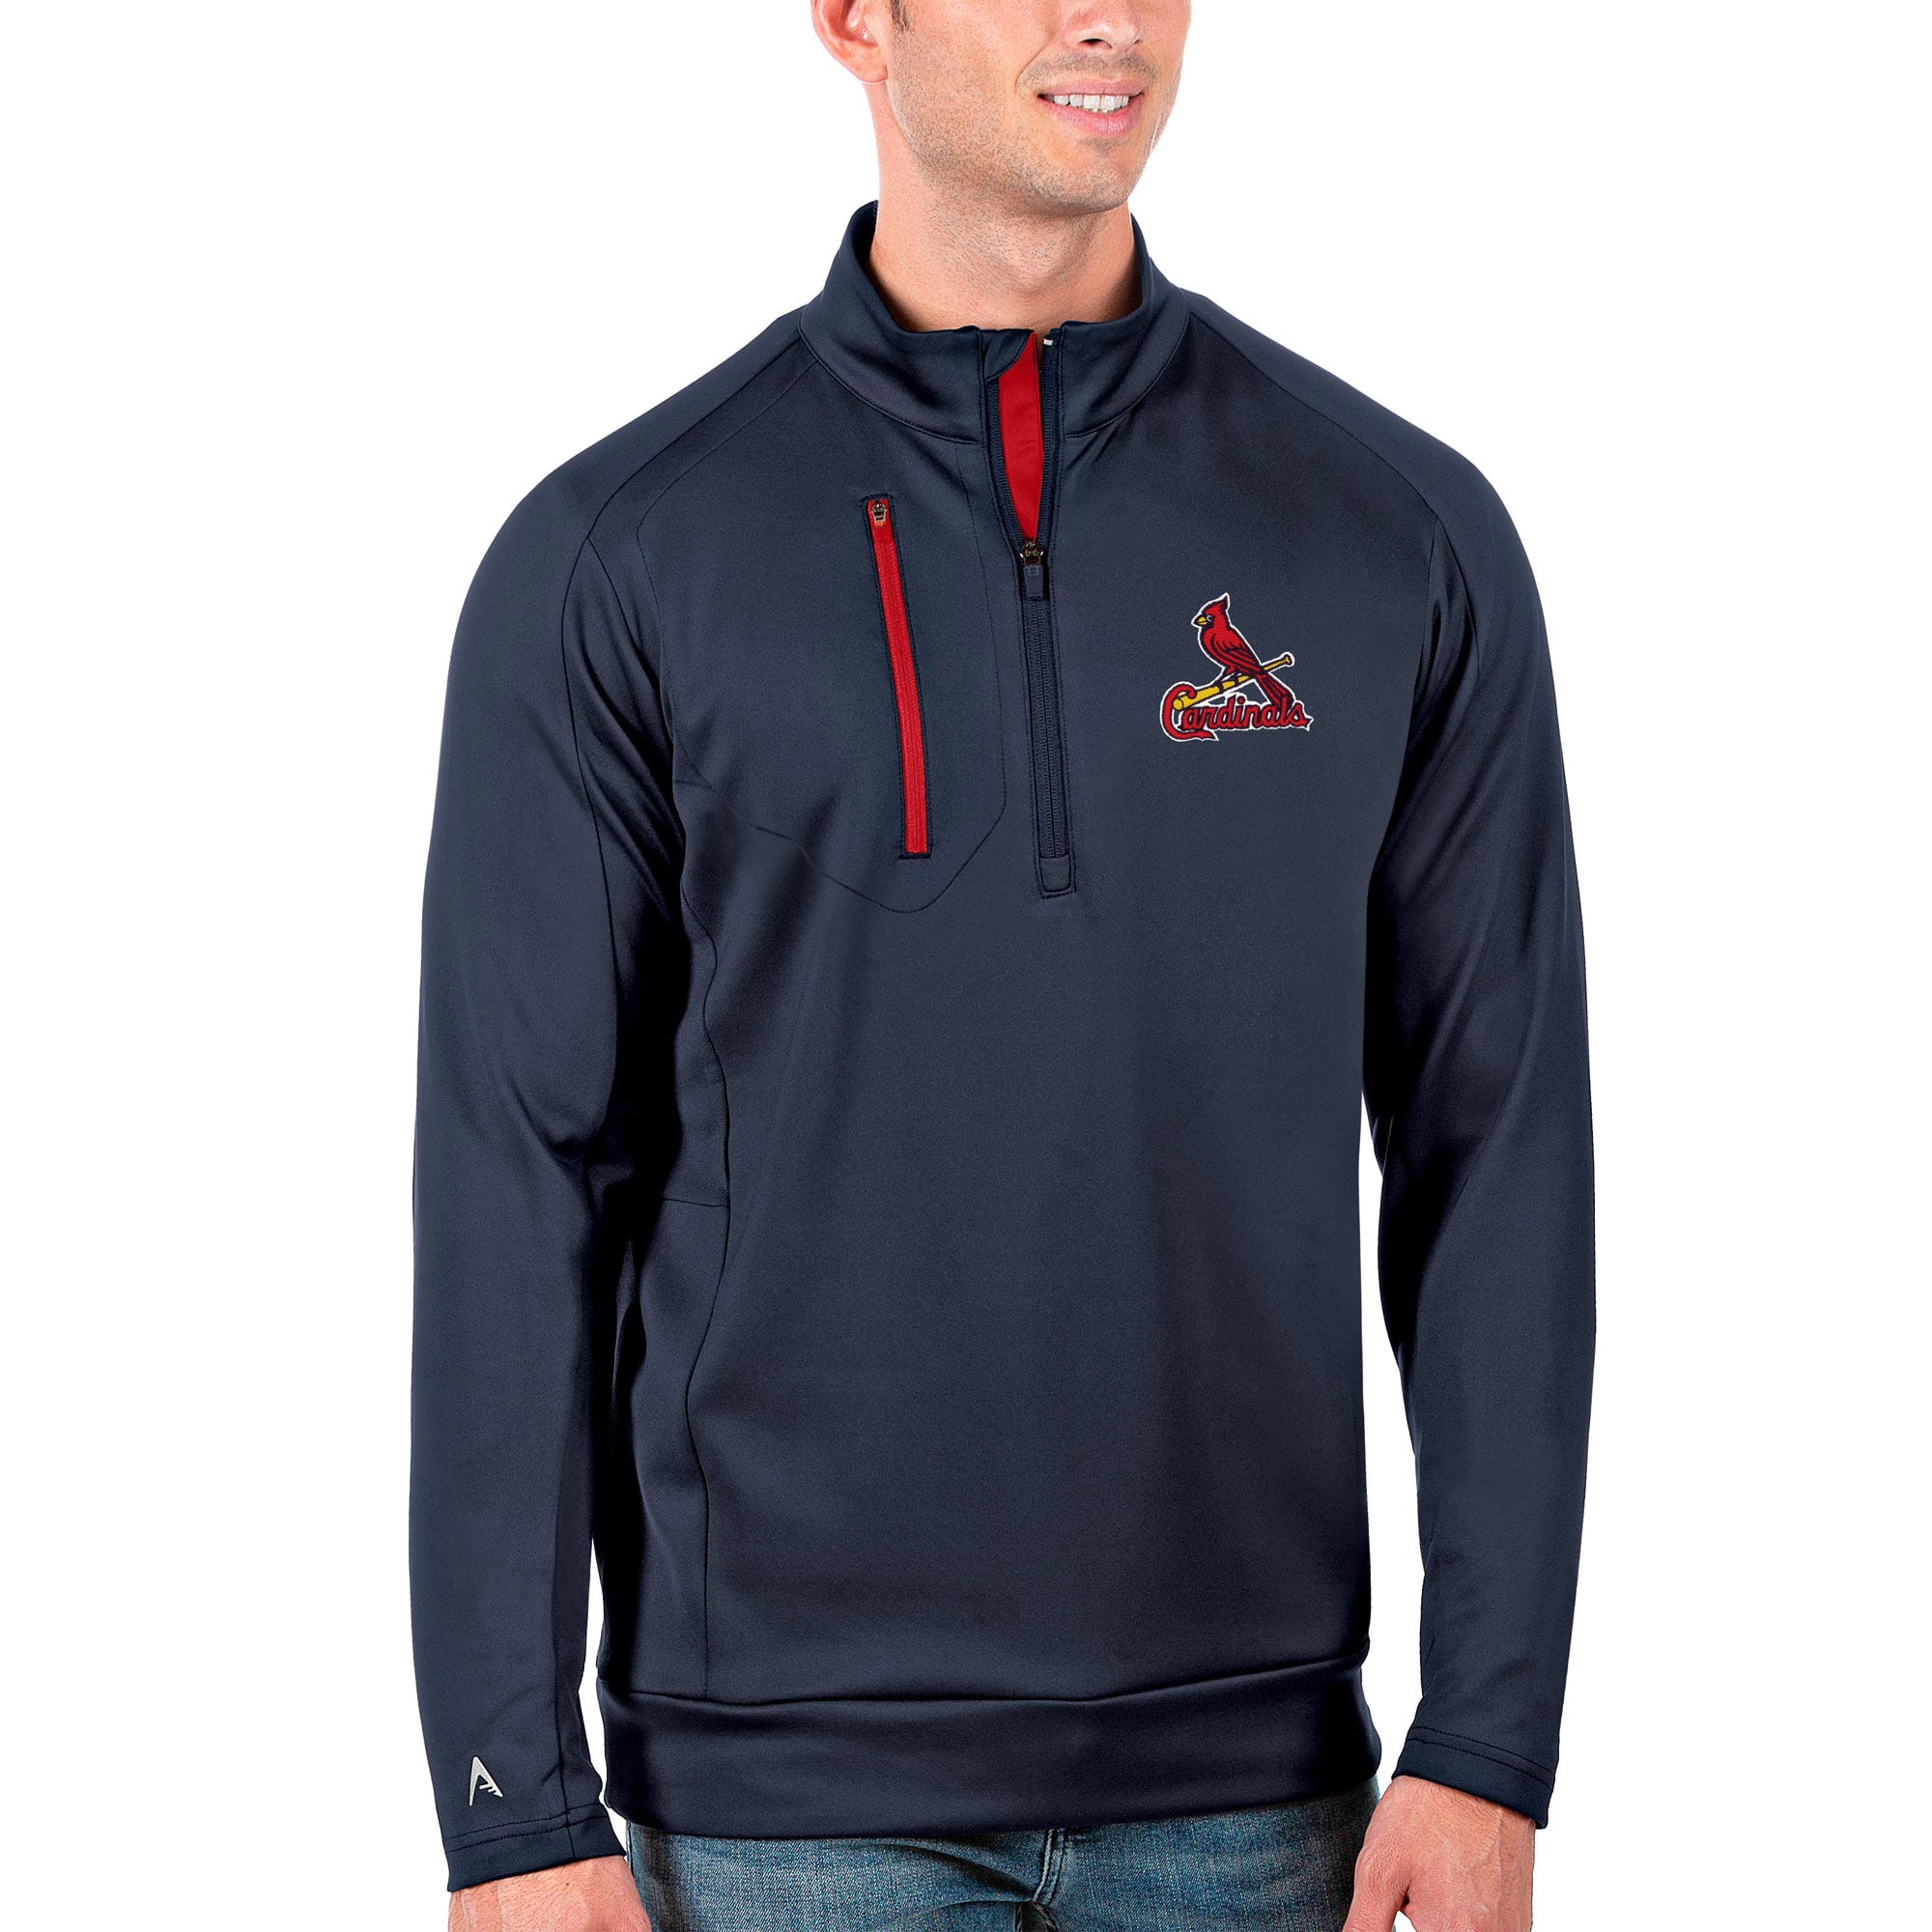 Men's Antigua Navy/Red St. Louis Cardinals Generation Quarter-Zip Pullover Jacket - image 1 of 1